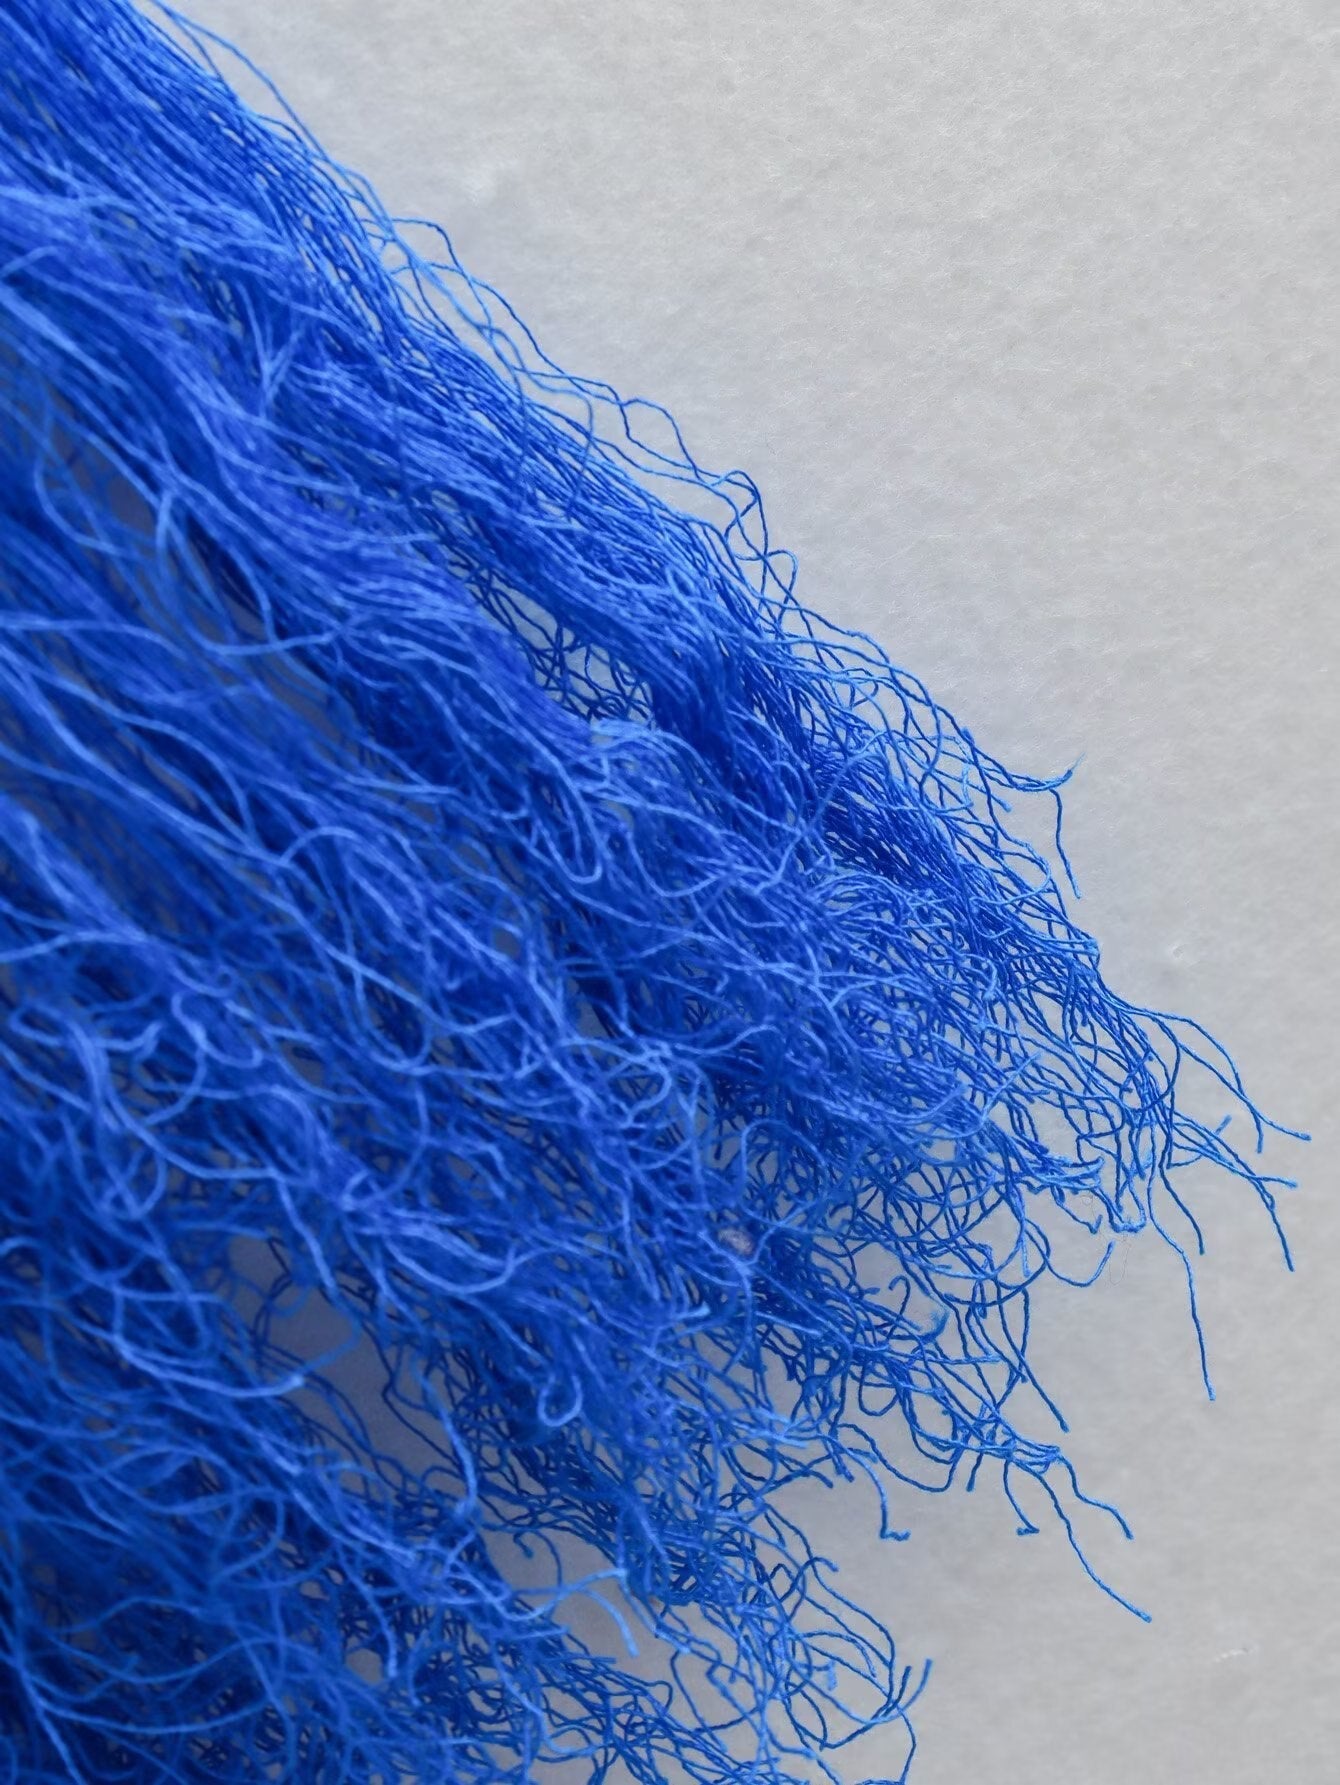 Royal Blue Knit Fray Dress - Kelly Obi New York